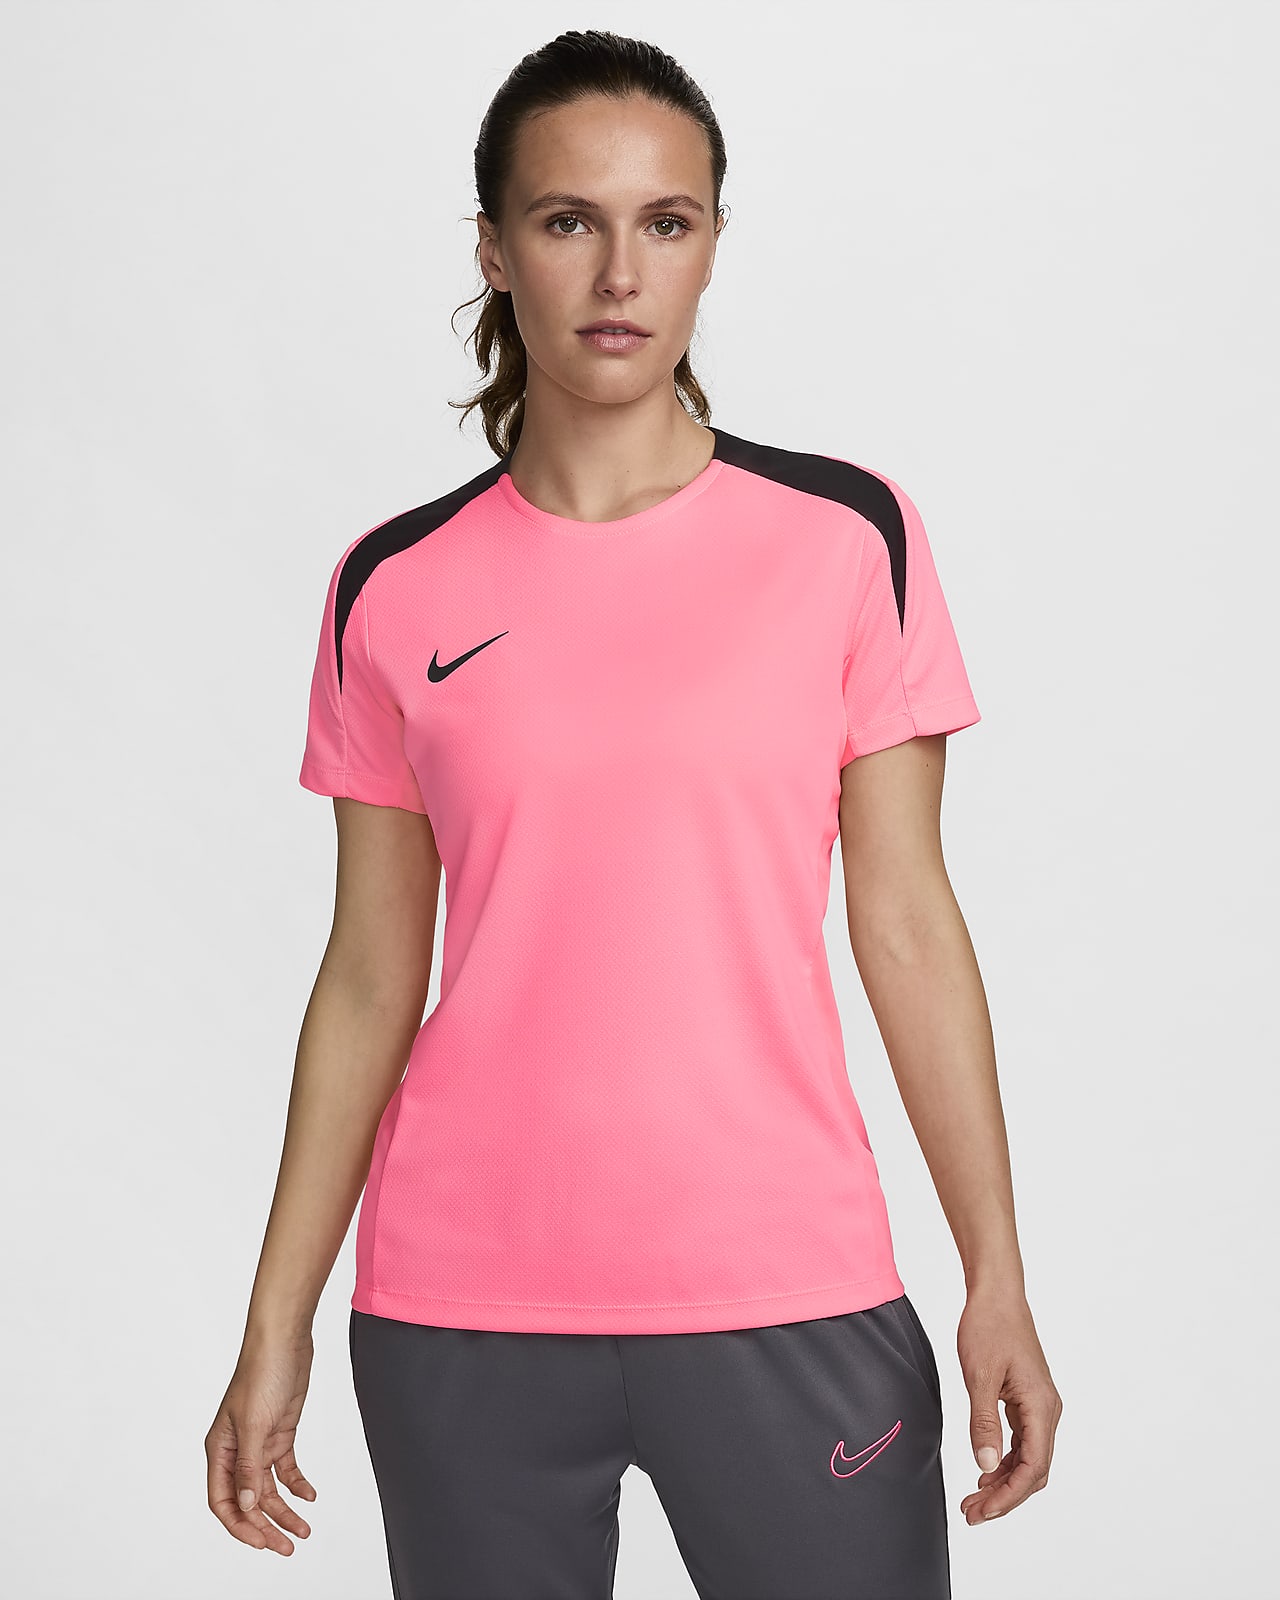 Damska koszulka piłkarska z krótkim rękawem Dri-FIT Nike Strike